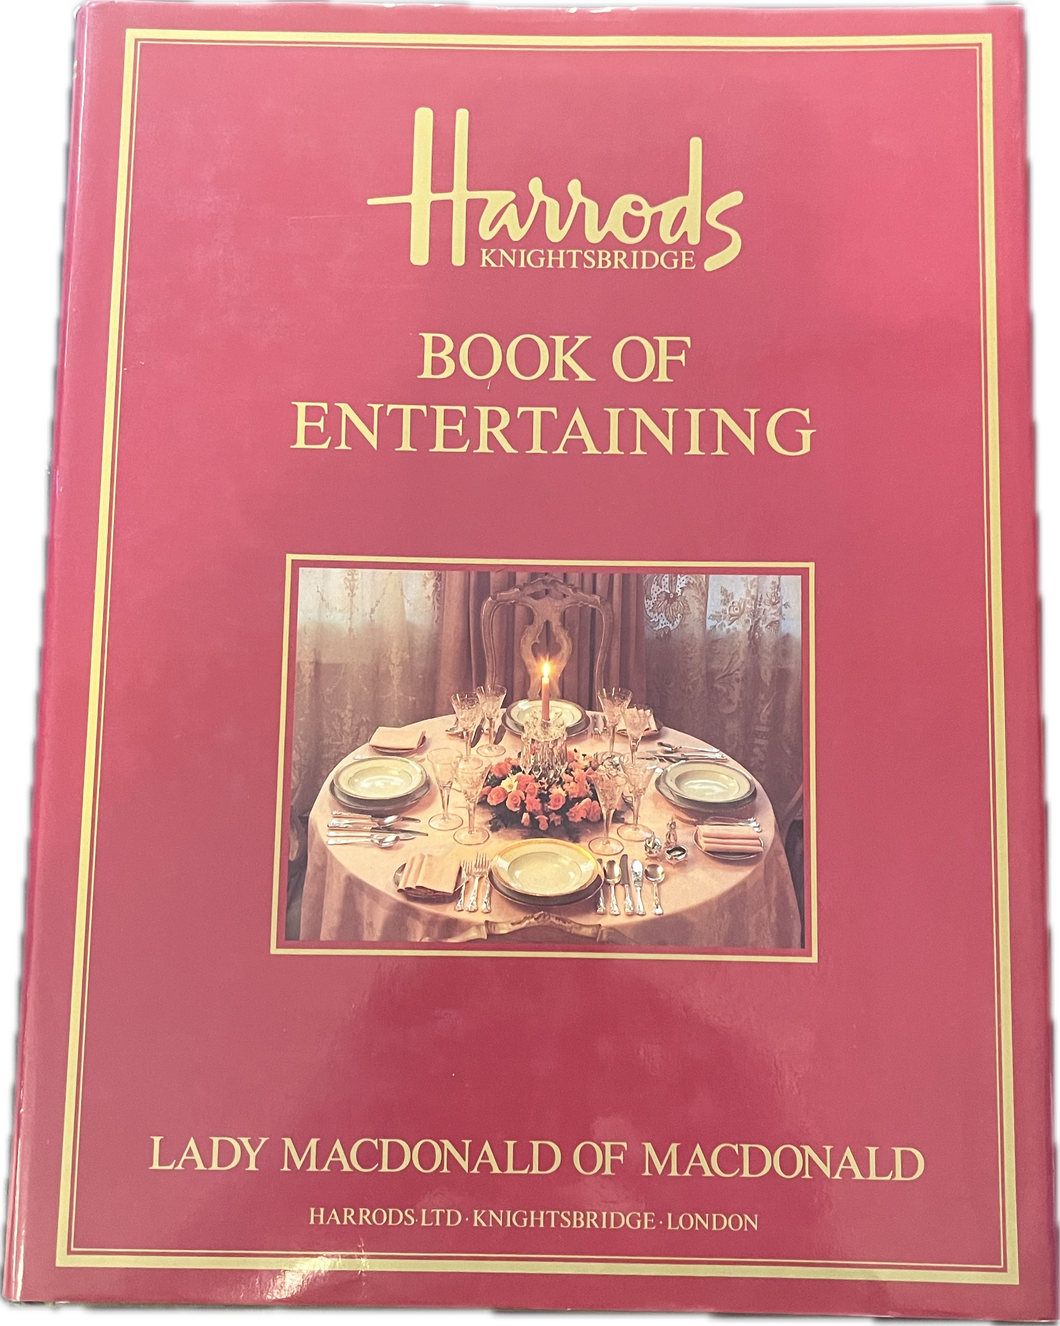 Harrods Book of Entertaining by Lady Macdonald of Macdonald